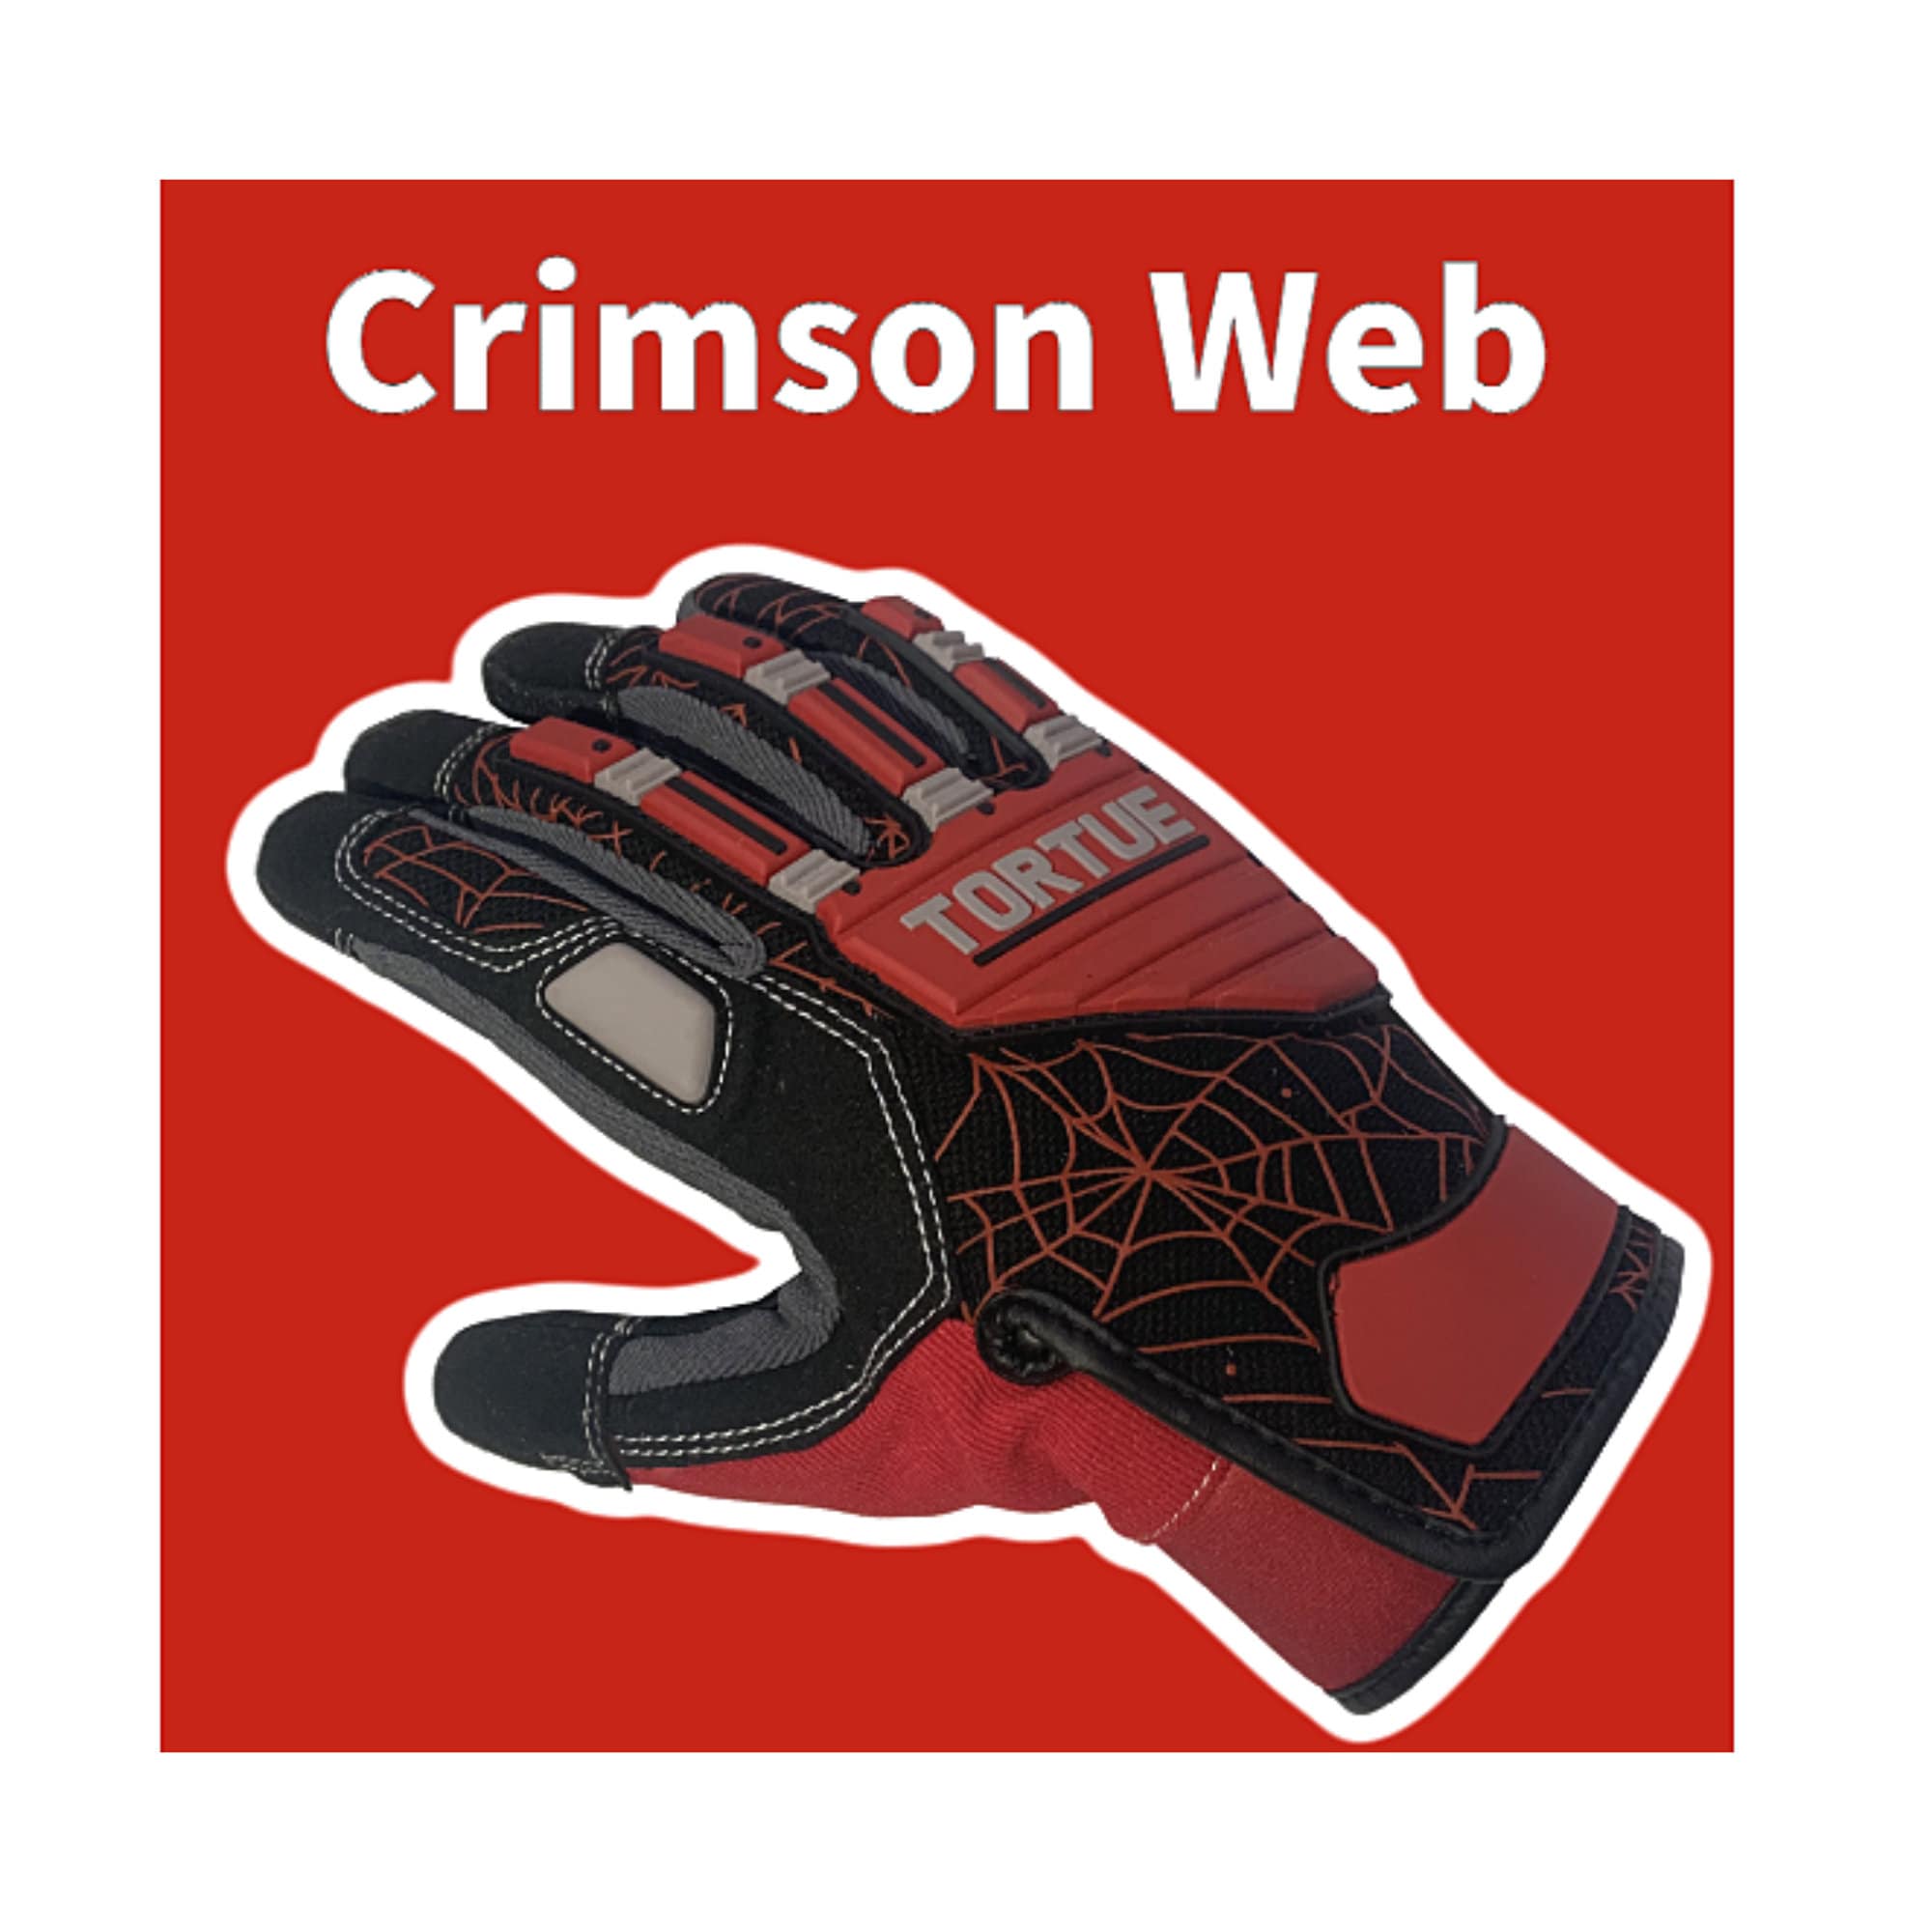 Csgo Gloves Shop Online - Etsy